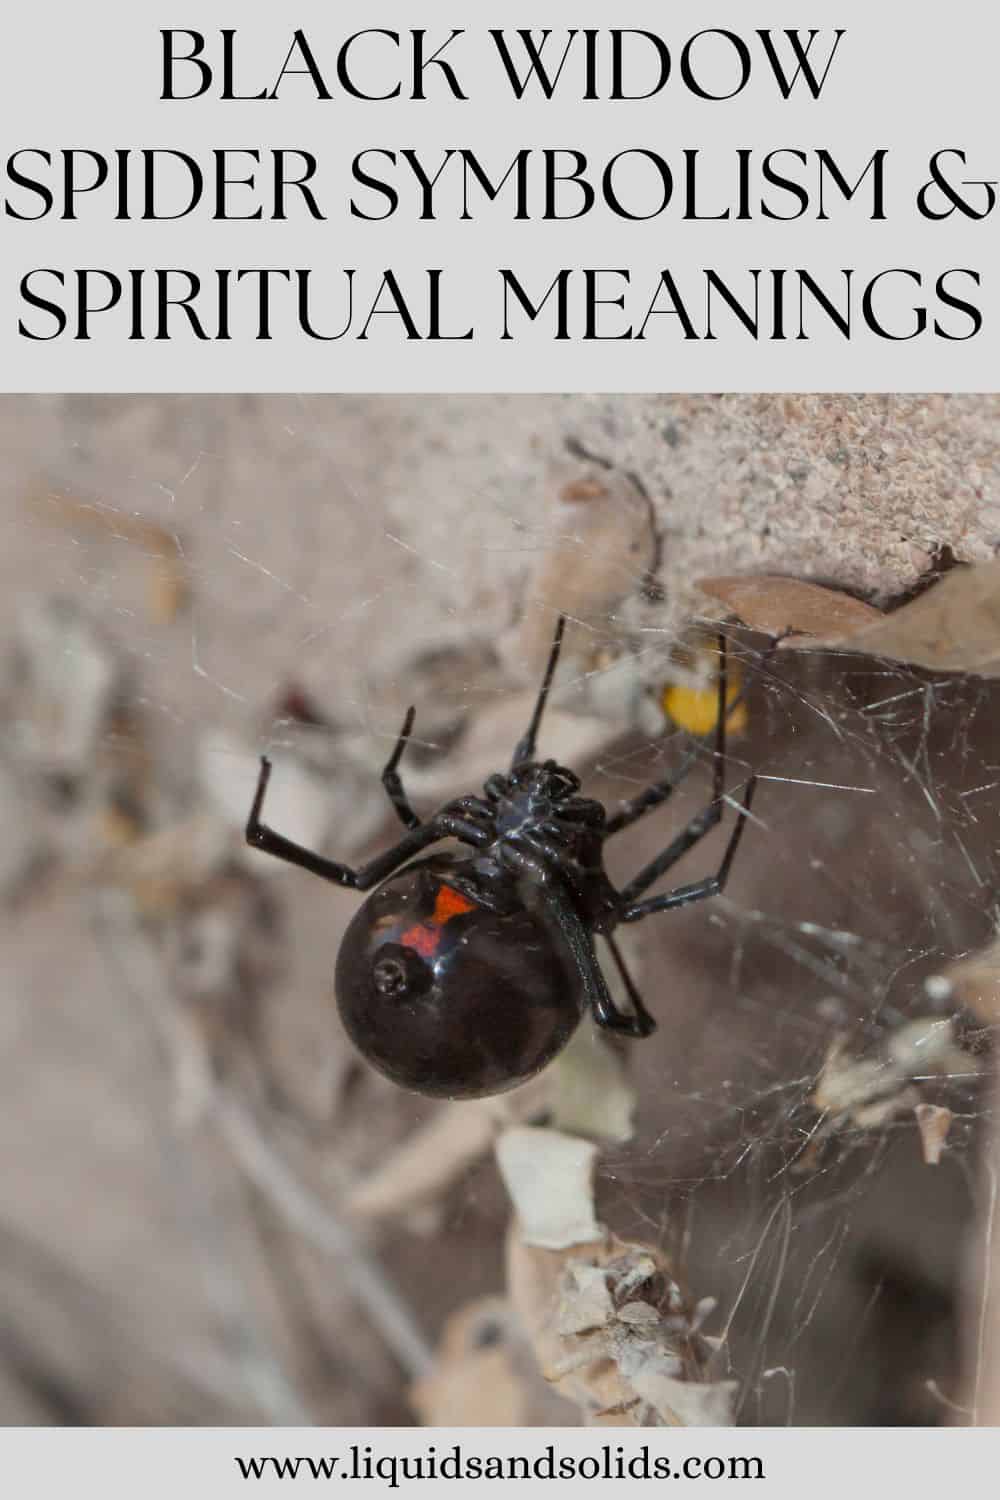 Black Widow Spider Symbolism & Spiritual Meanings